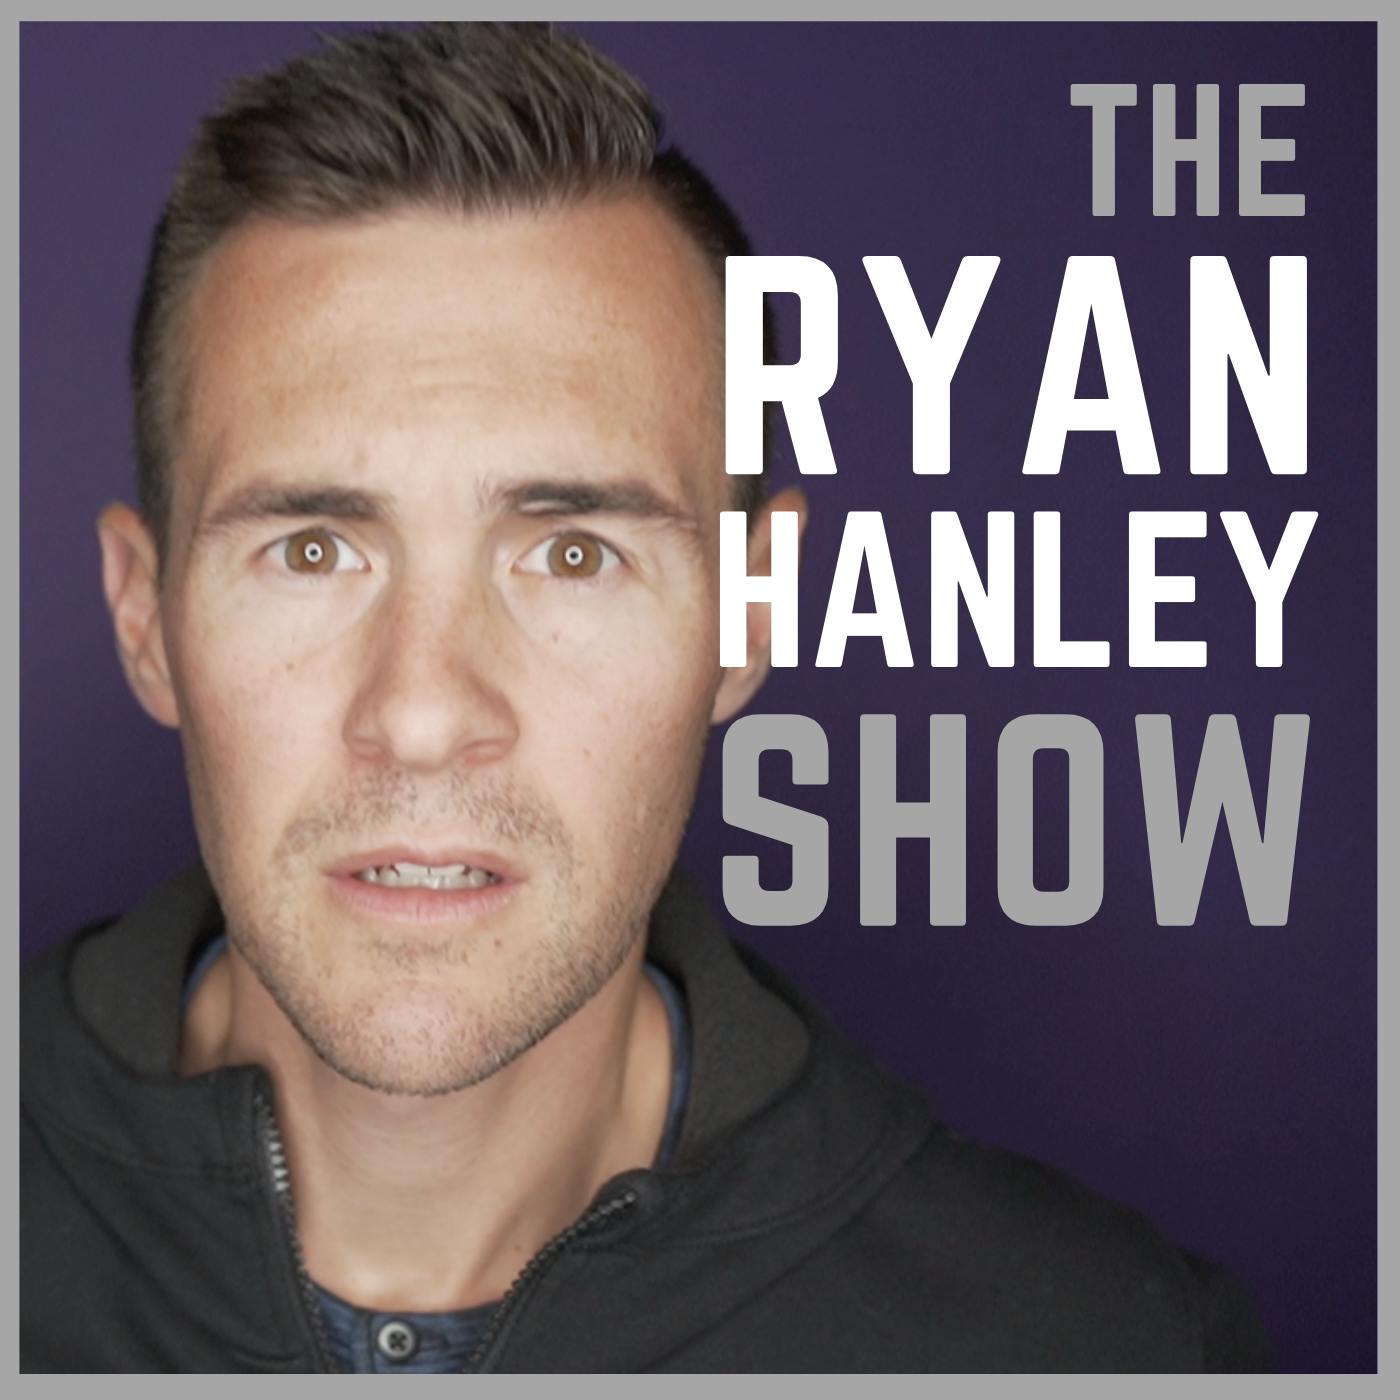 The Ryan Hanley Show